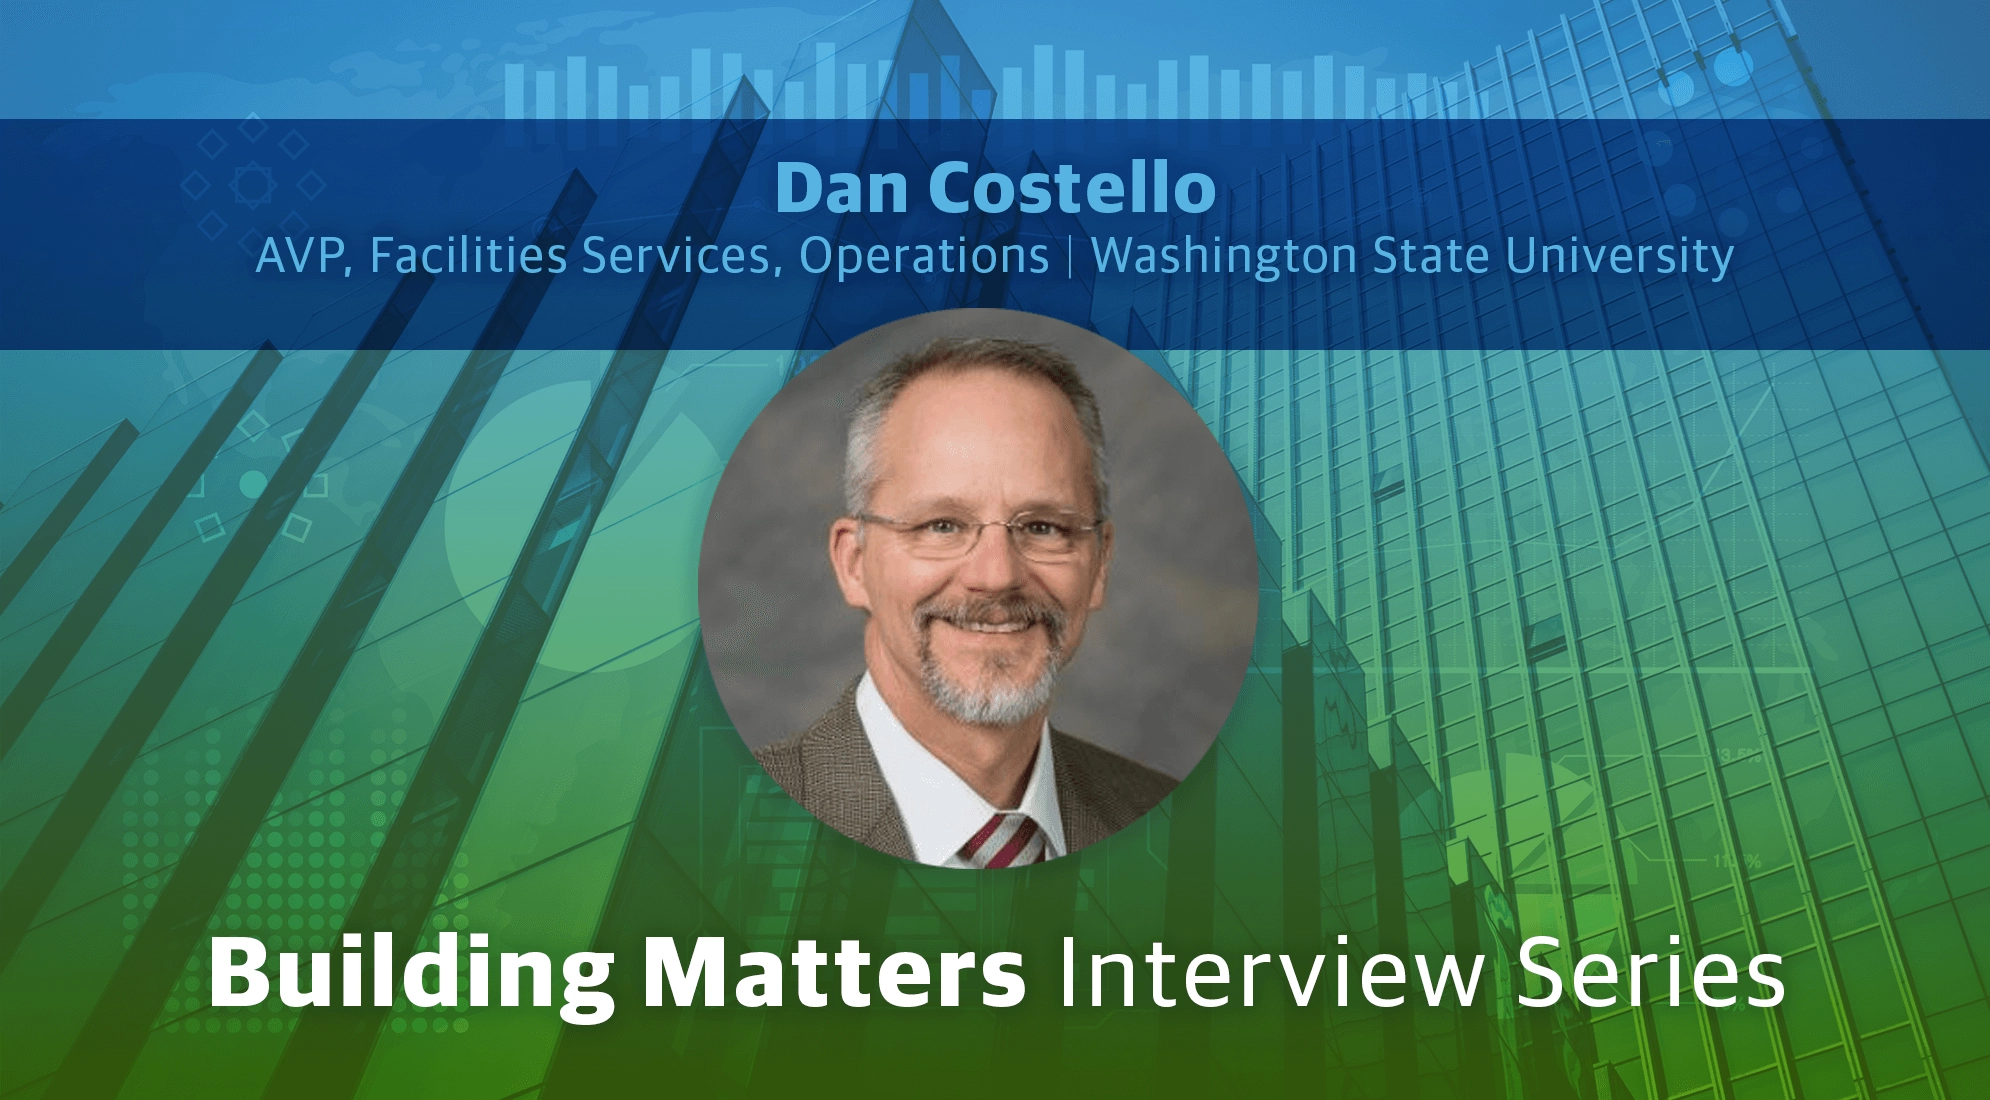 University Facilities Insights from Dan Costello 2